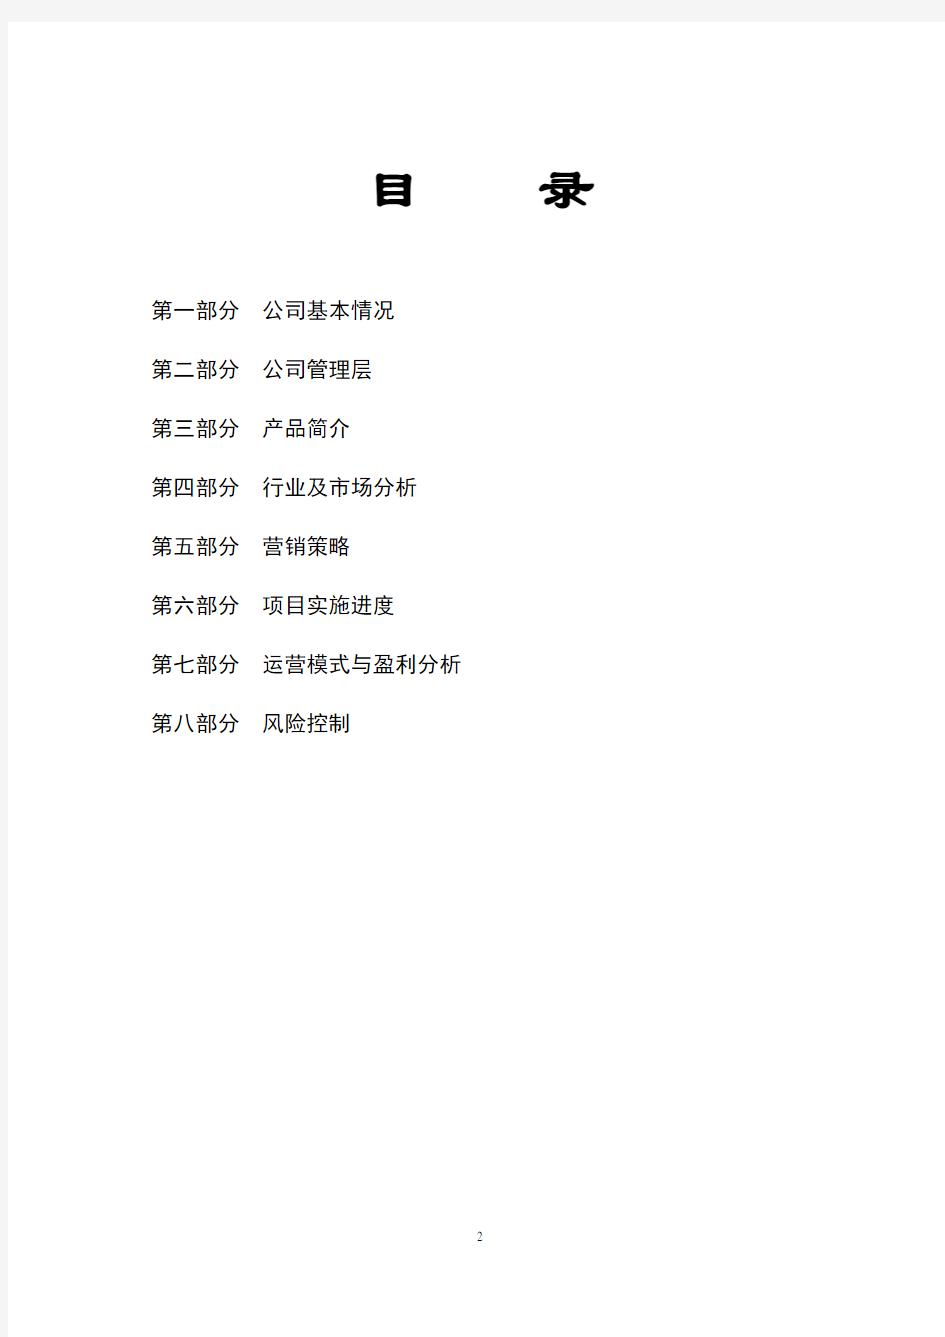 ME-BOX商业计划书 南京大学 高杨逸乔、查燚斐、张蓝雪、杨铮、朱方圆